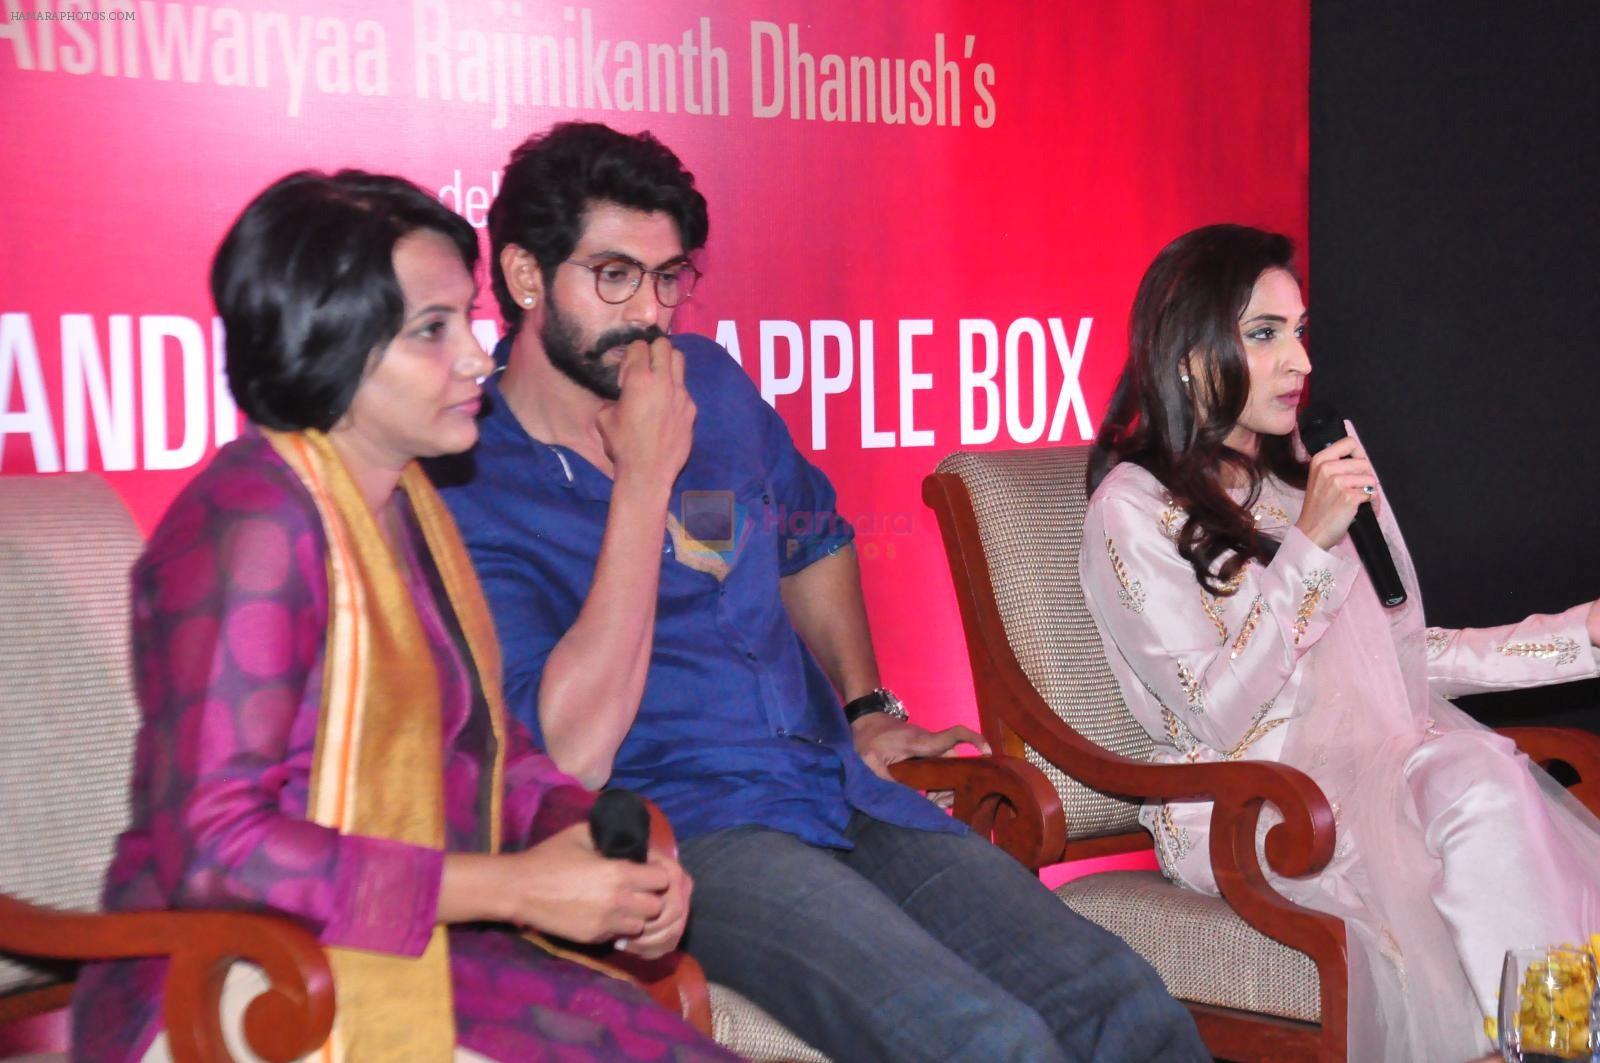 Rana Daggubati at the launch of Aishwarya R. Dhanush's book Standing On an apple box on 20th Dec 2016